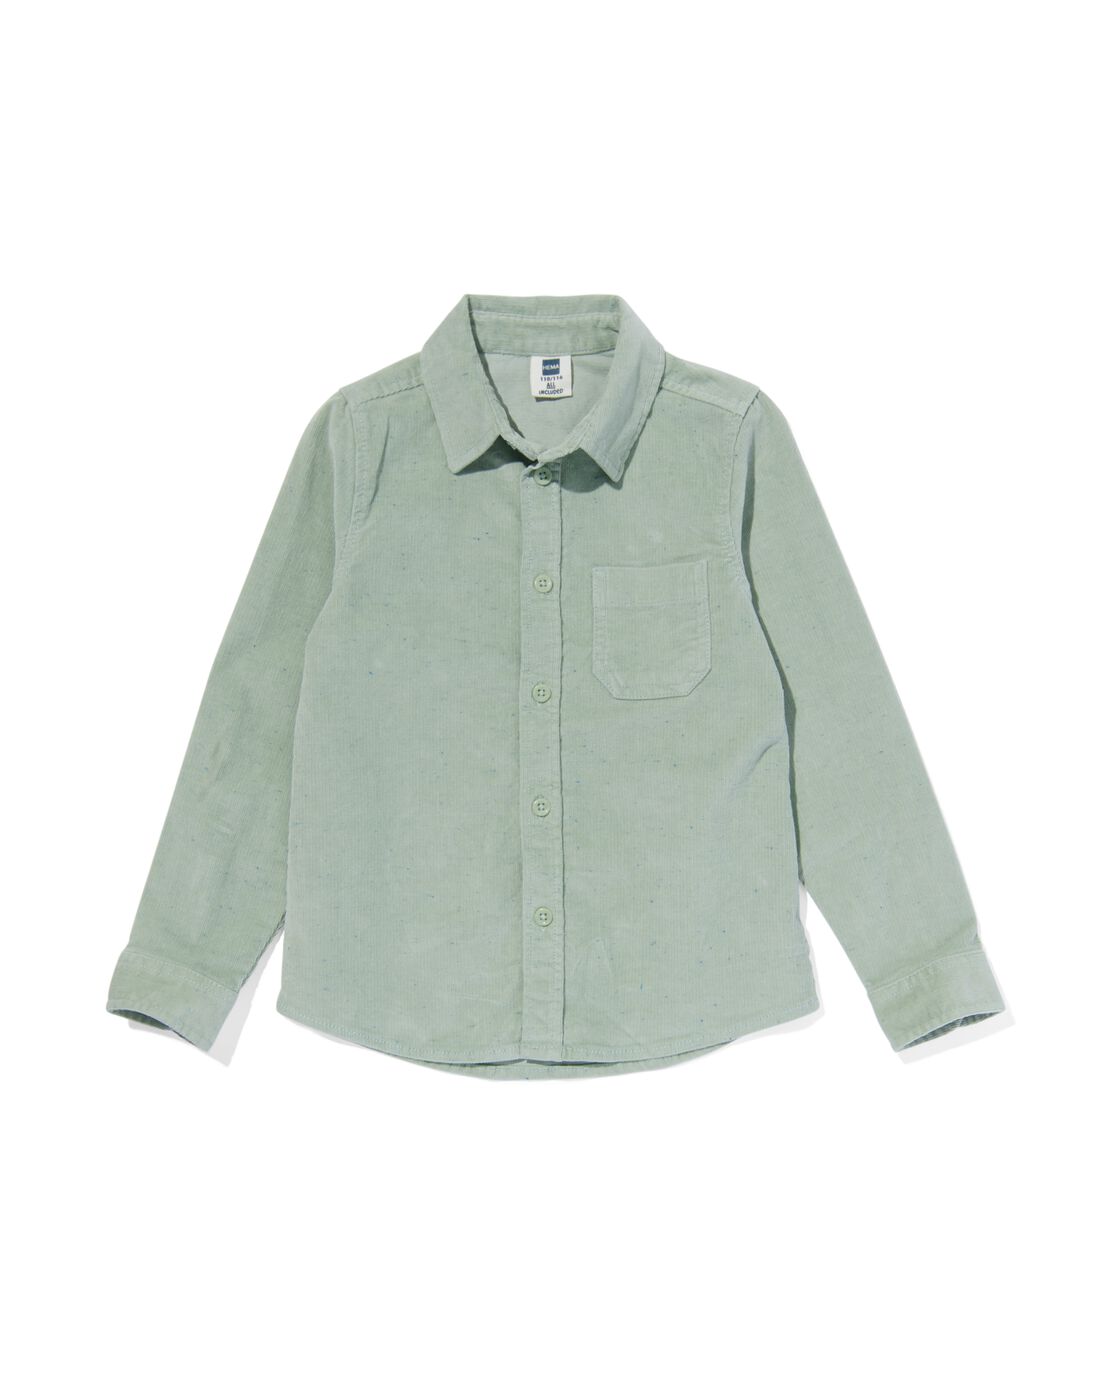 HEMA Kinderoverhemd Corduroy Groen (groen)